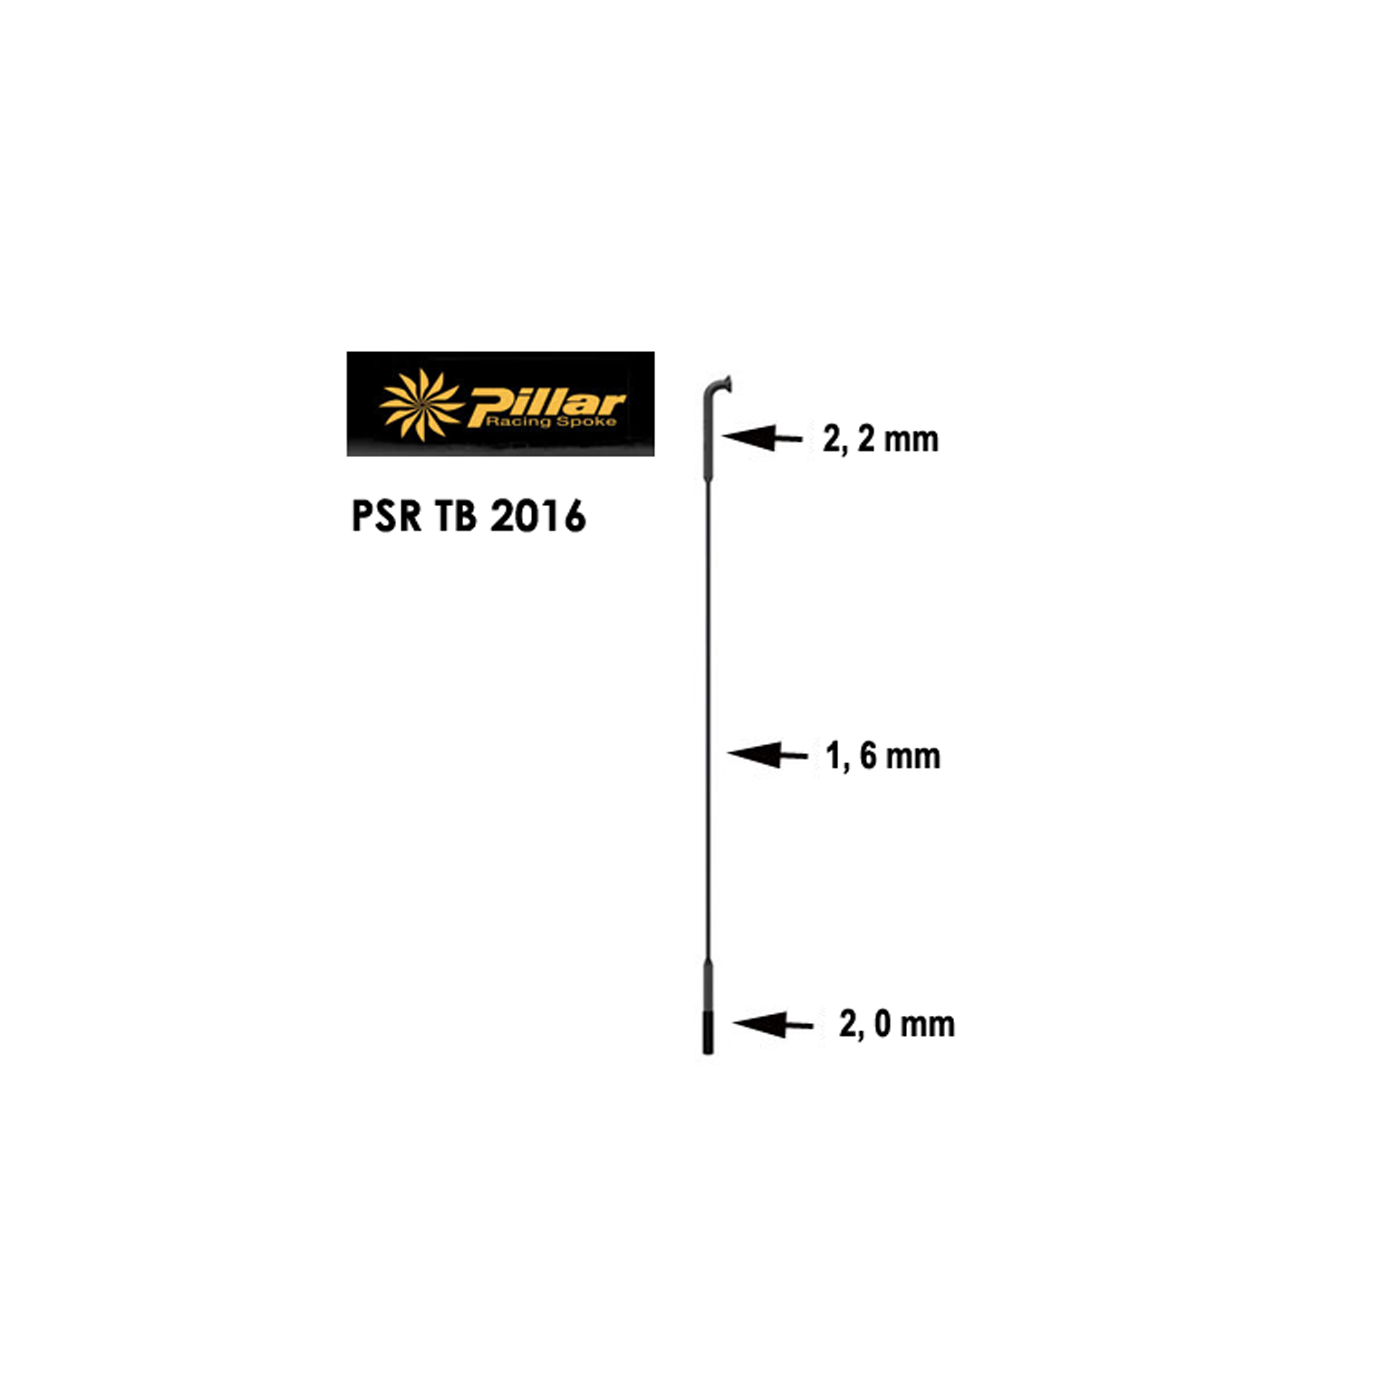 PILLAR RACING SPOKE PSRTB2016 JB, BLK 1,6 MM 279 MM UNTHREADED